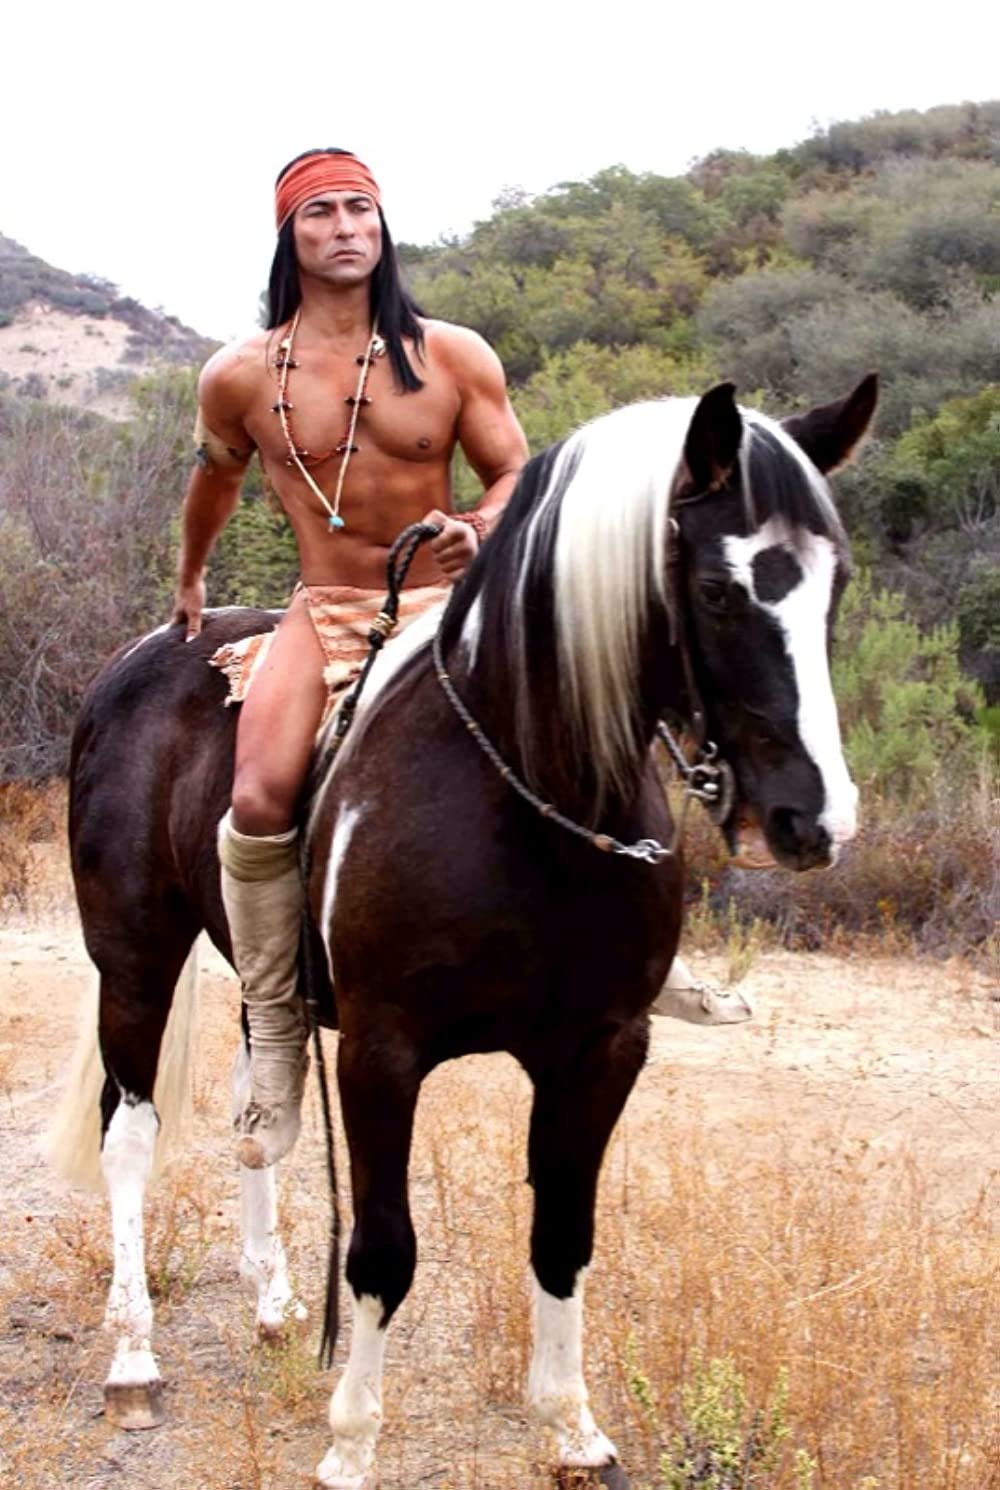 Конь мужик баб. Джей Таваре индеец. Джей Таваре 2021. Индеец верхом на лошади. Мужчина на коне.